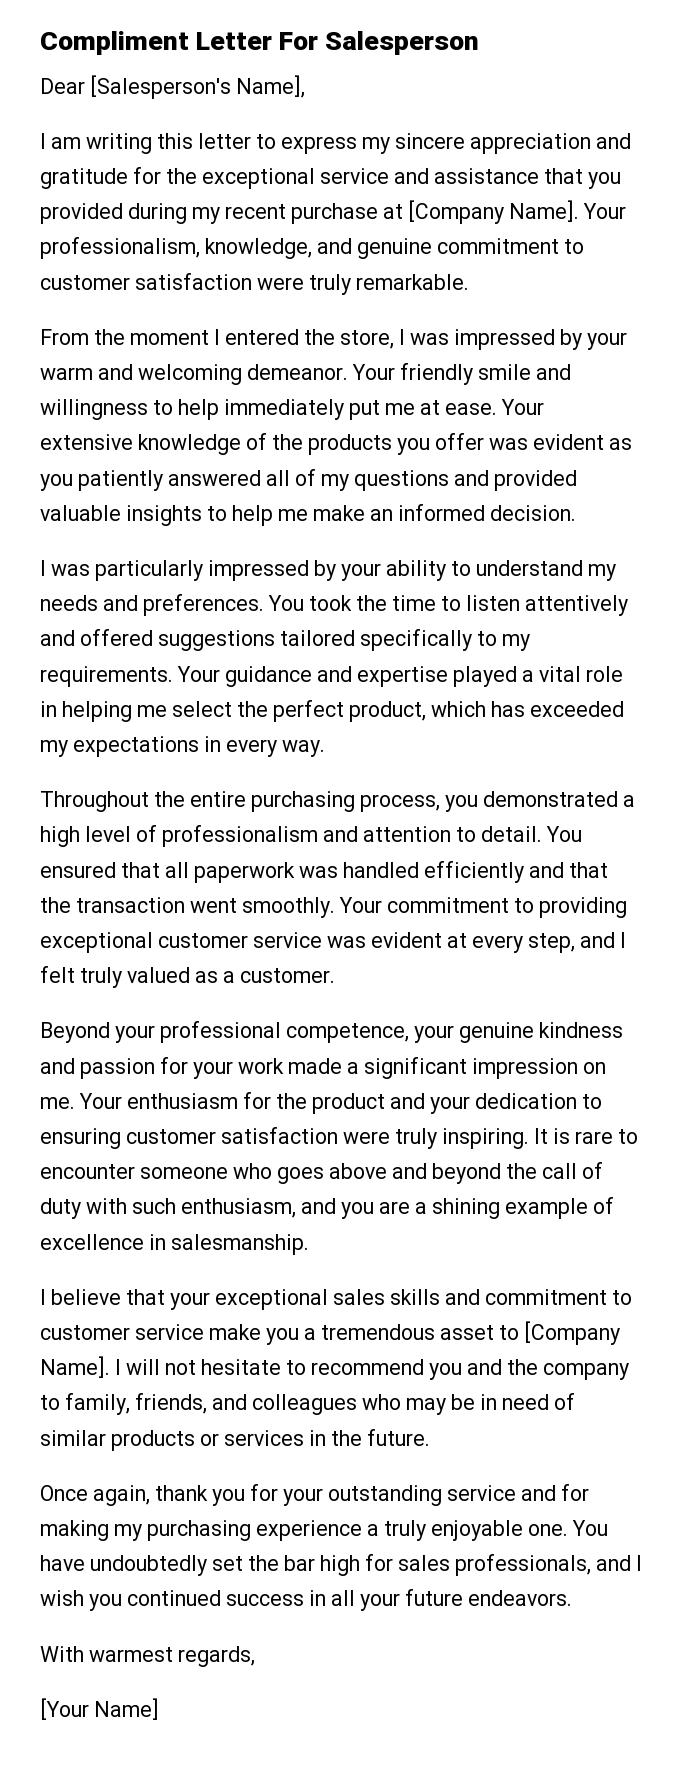 Compliment Letter For Salesperson